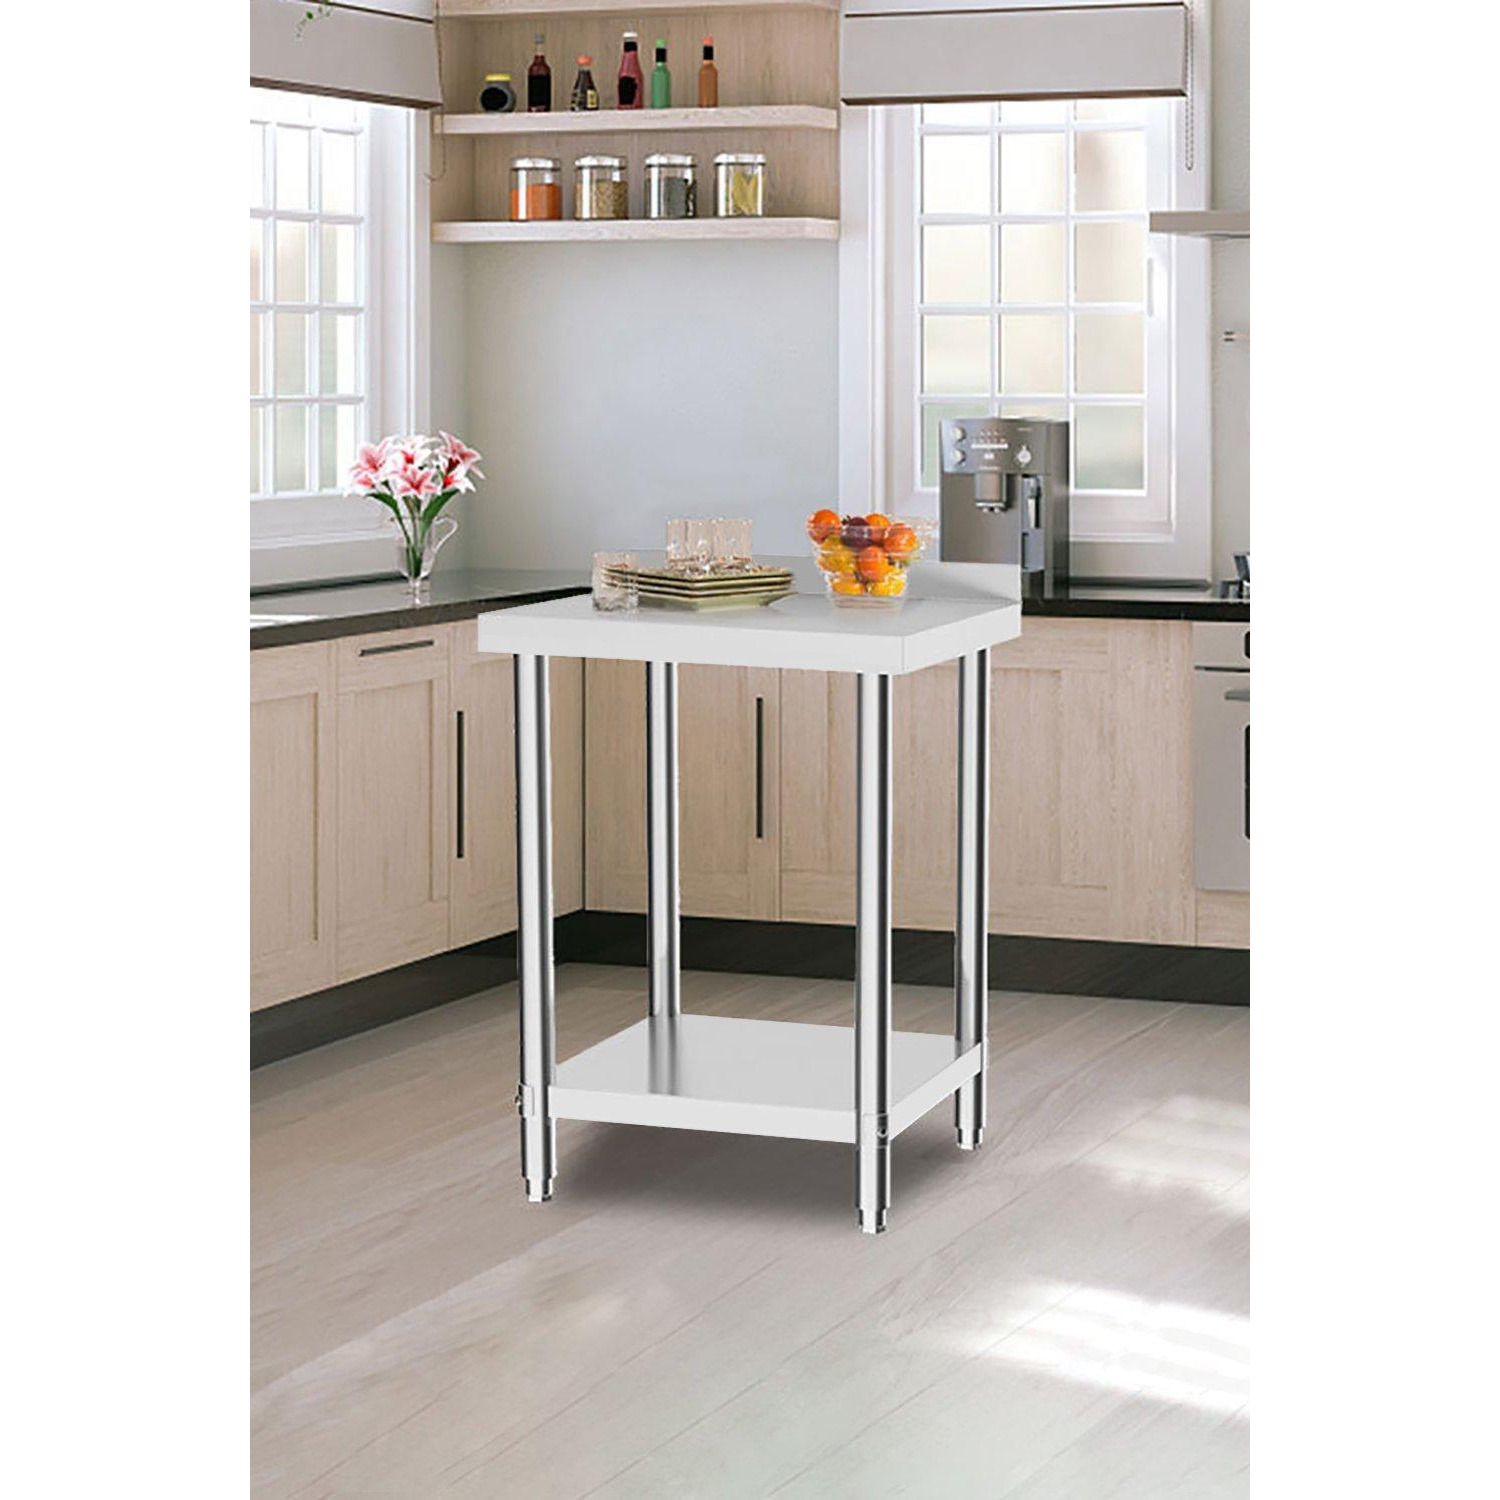 2 Tier Commercial Kitchen Prep & Work Table with Backsplash - image 1